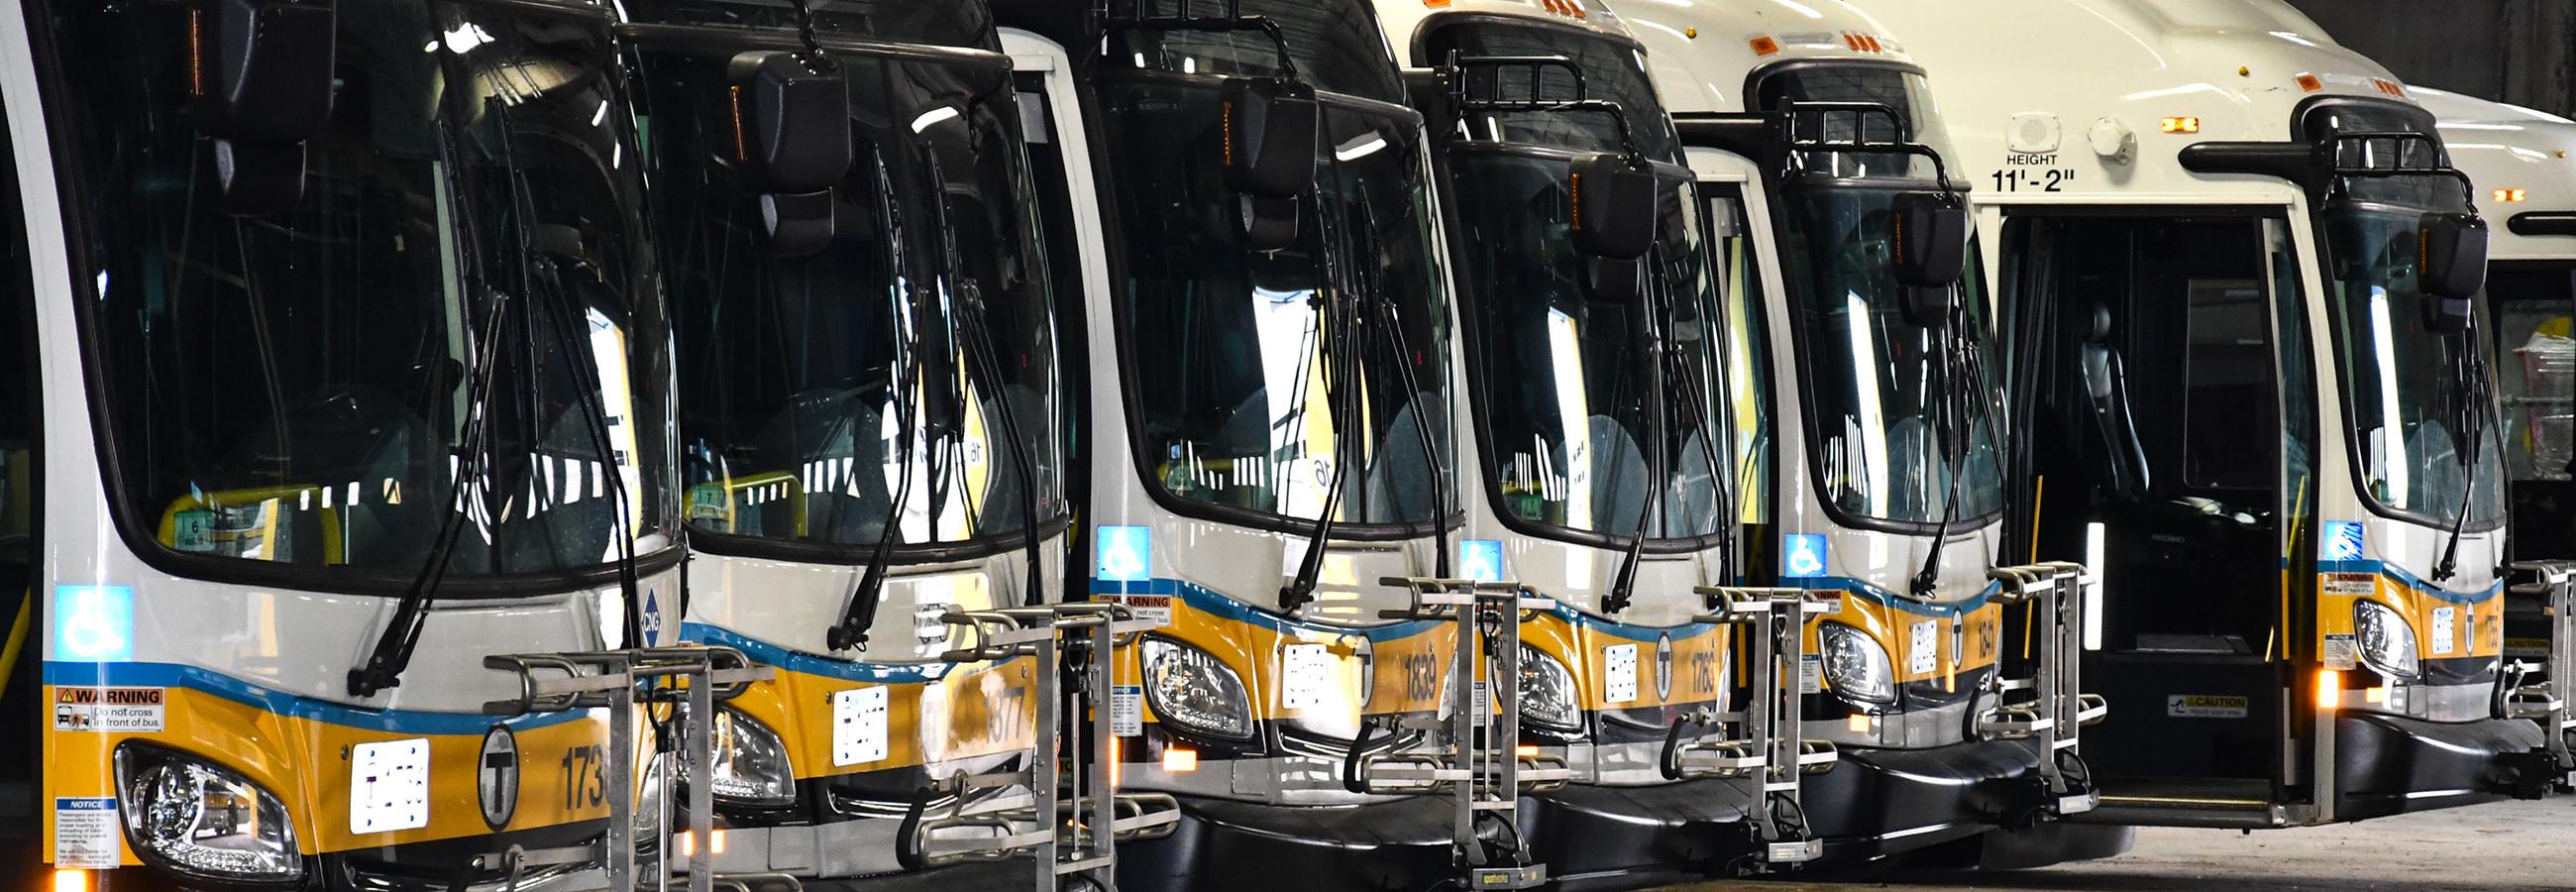 Row of MBTA buses